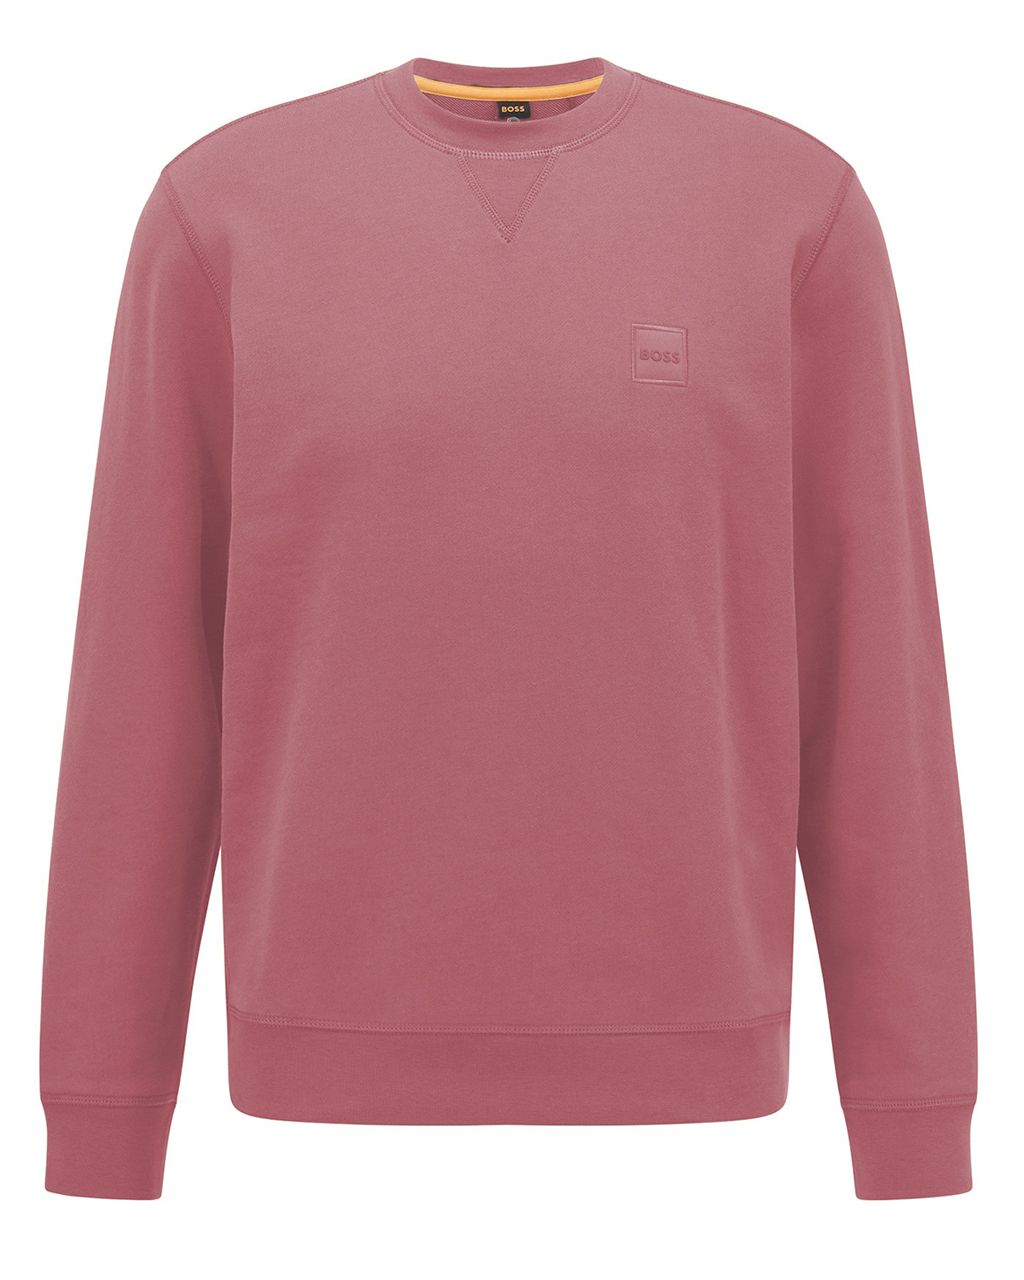 Hugo Boss Casual Westart Sweater Rood 076817-001-L